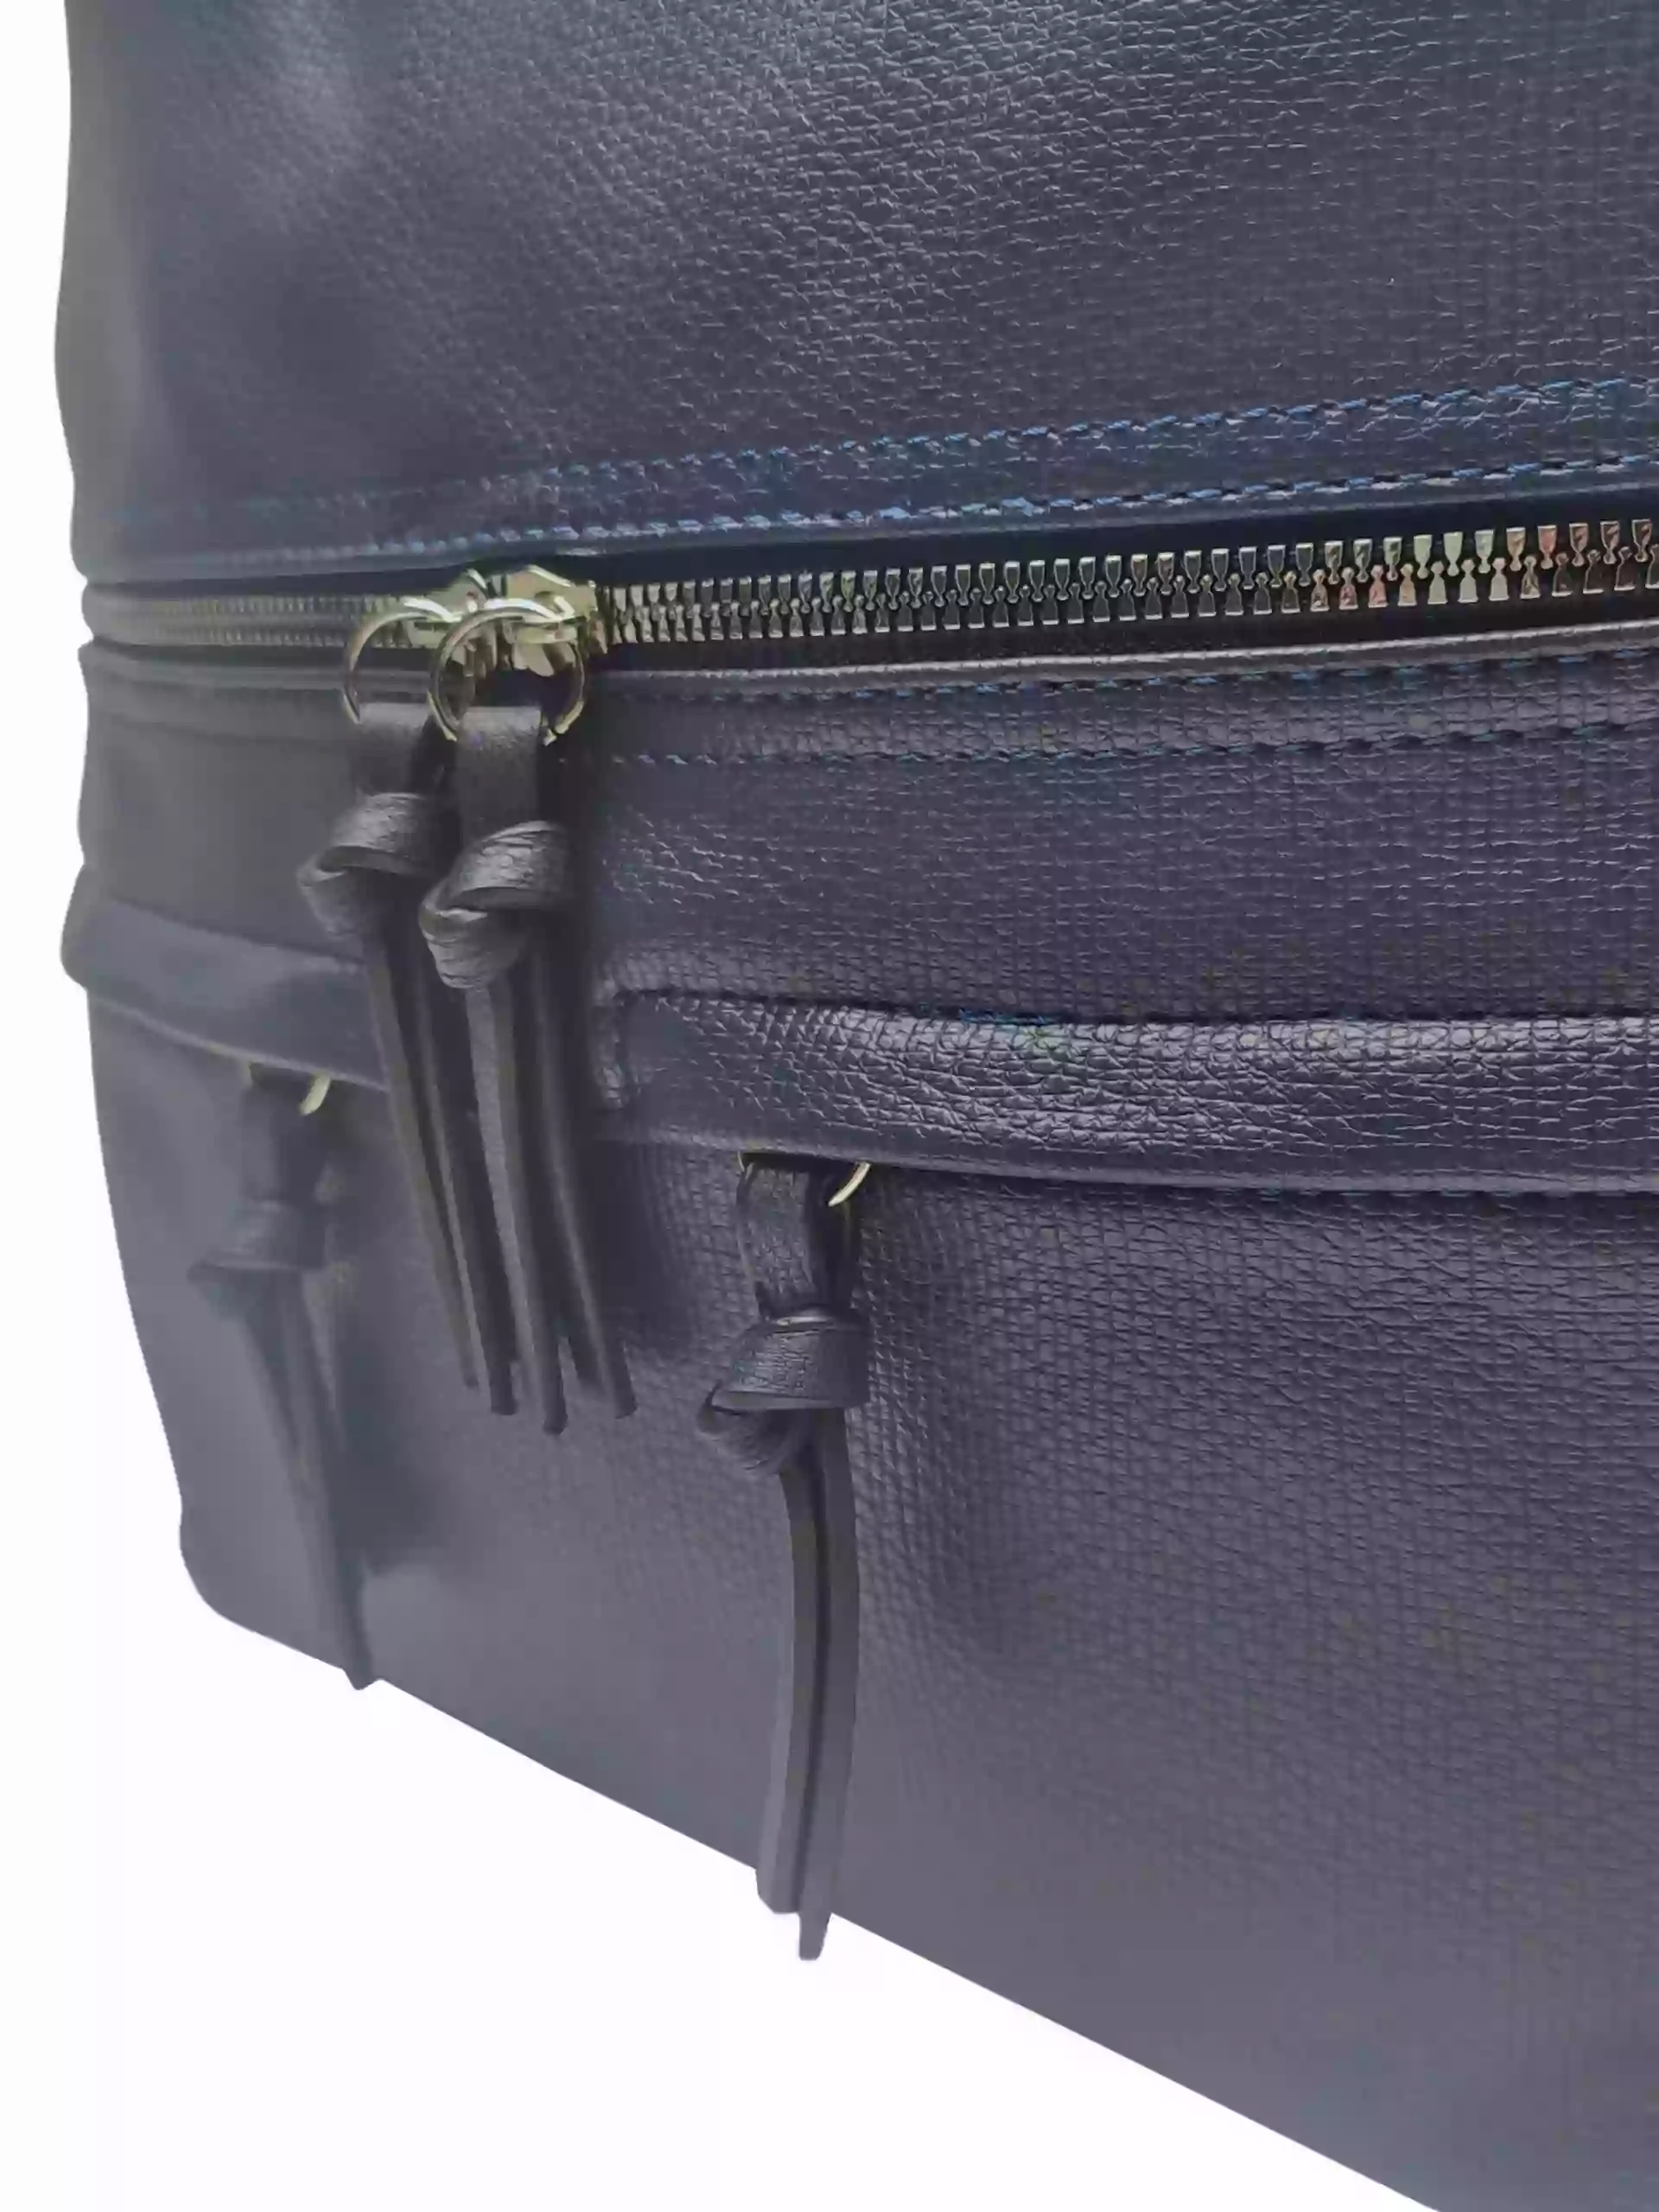 Velký tmavě modrý kabelko-batoh s kapsami, Tapple, H181175N2, detail kabelko-batohu